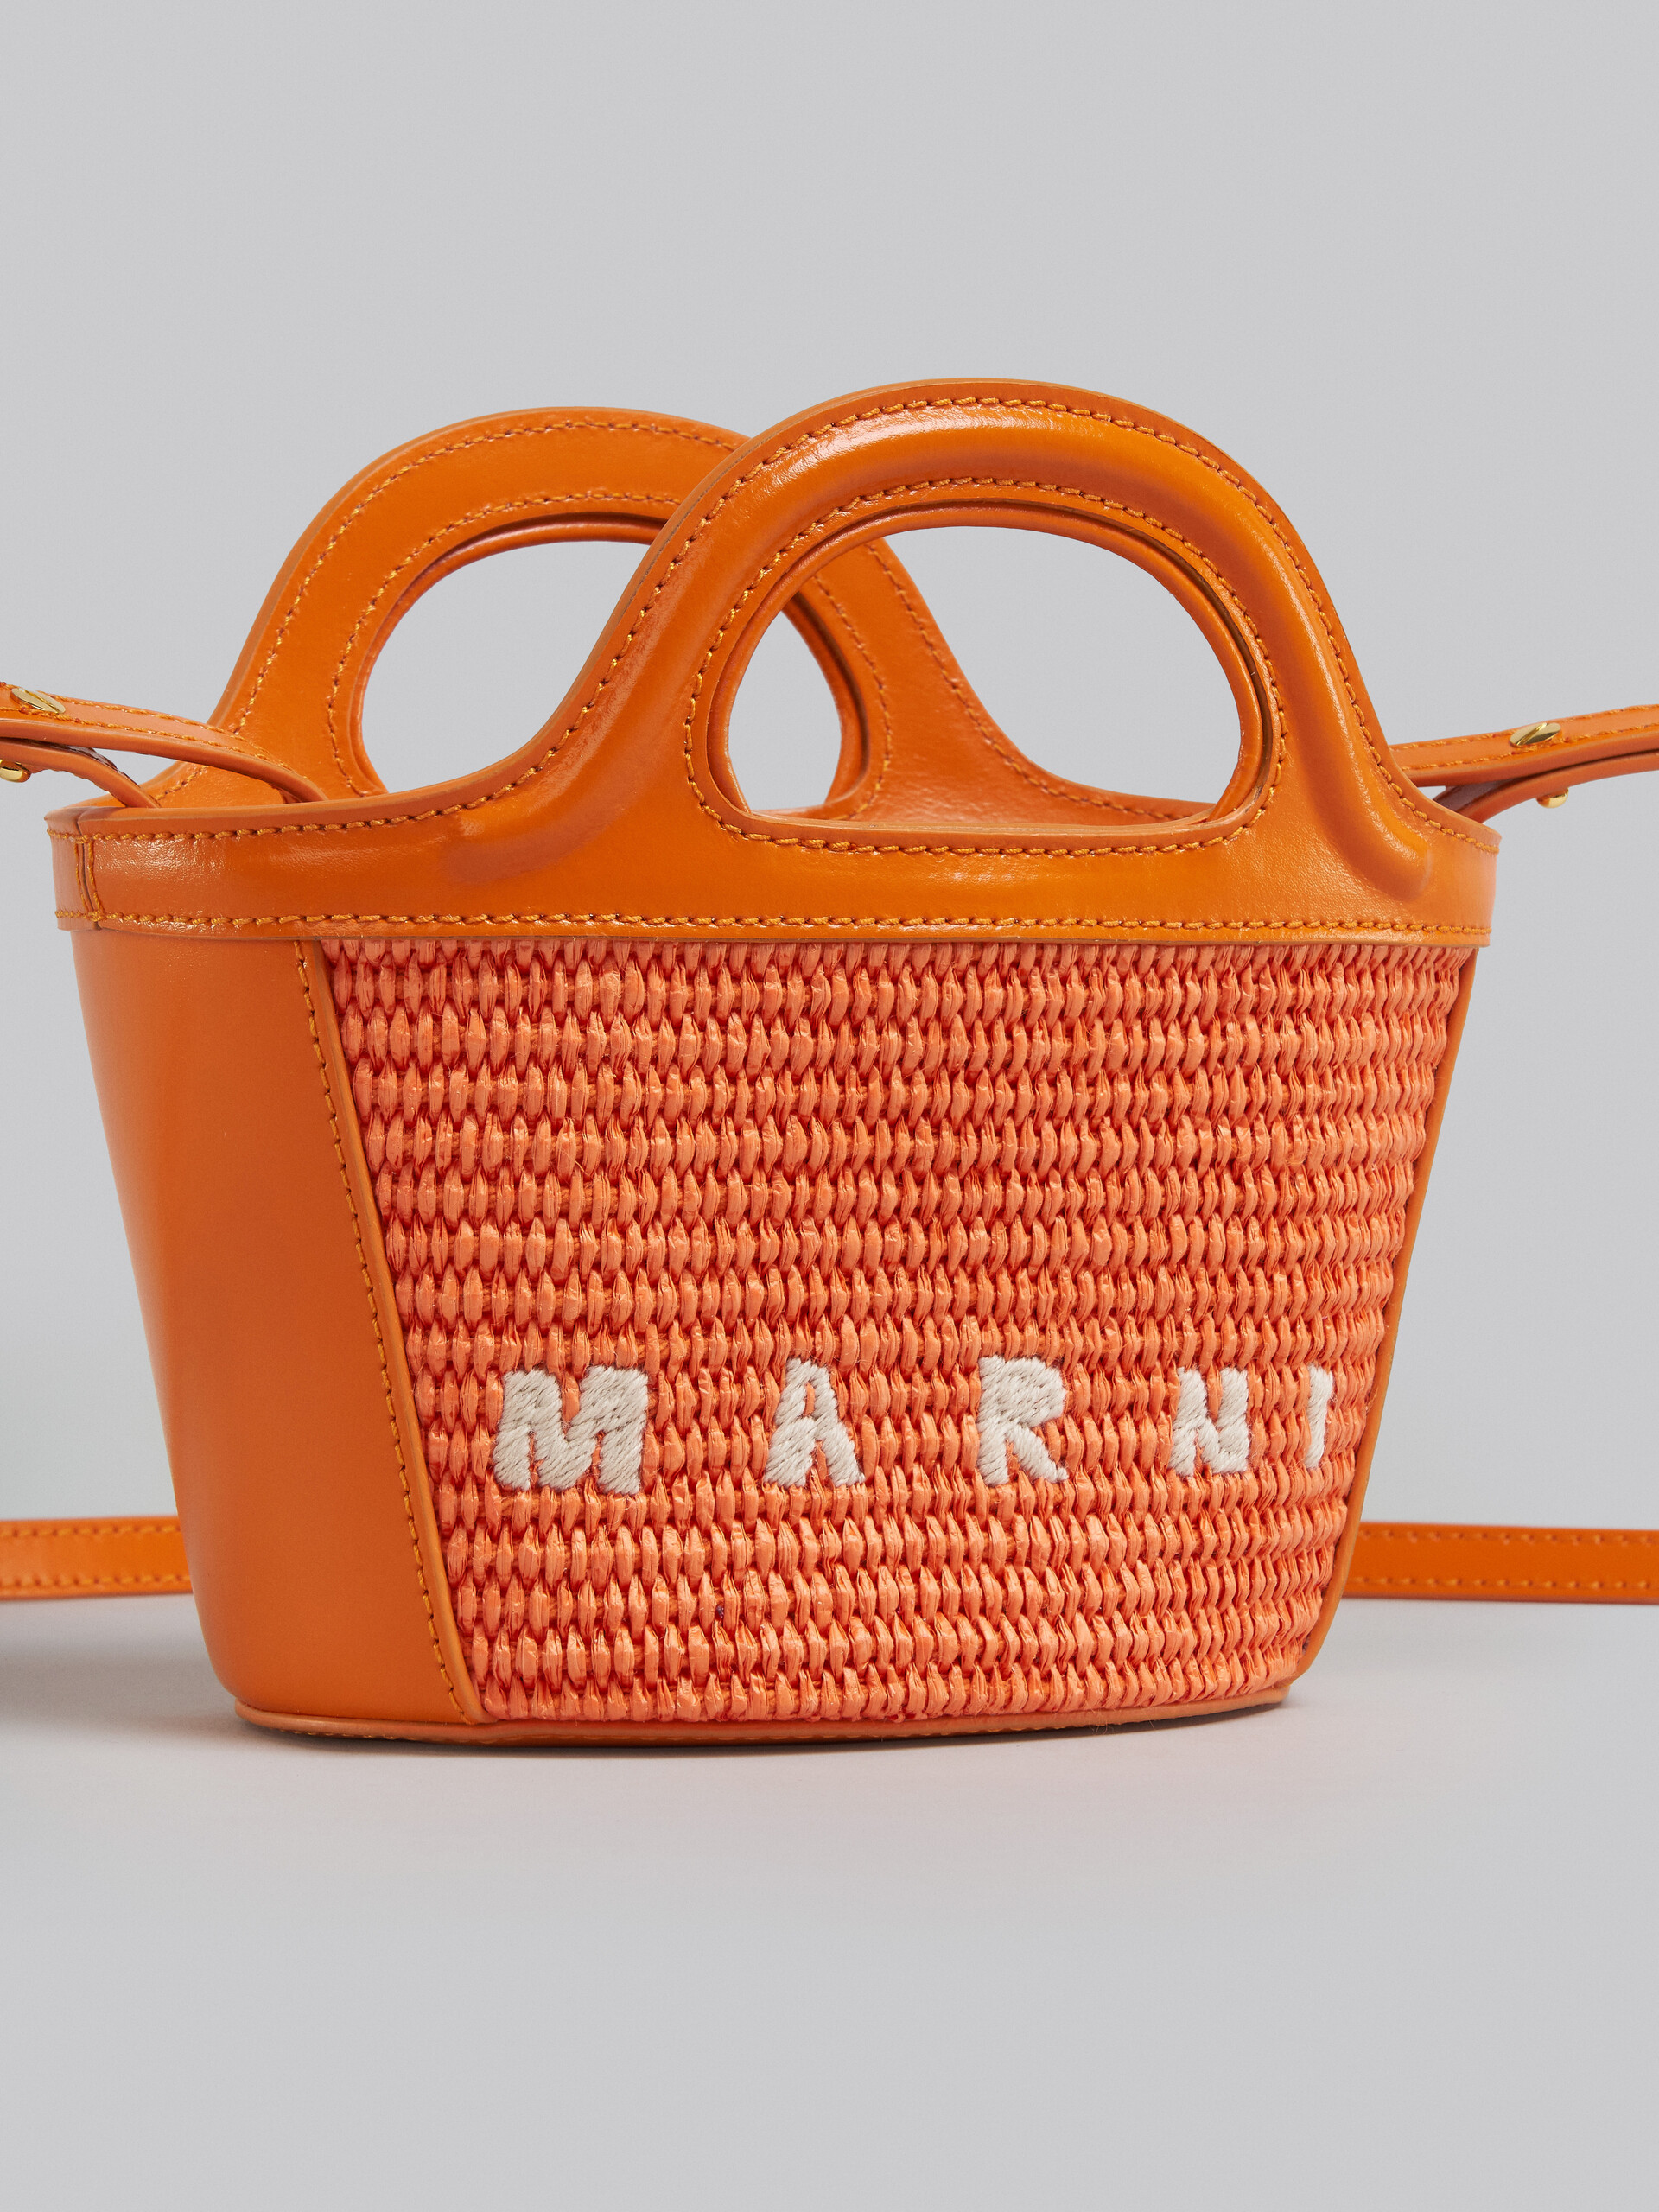 Tropicalia Micro Bag in orange leather and raffia - Handbags - Image 5